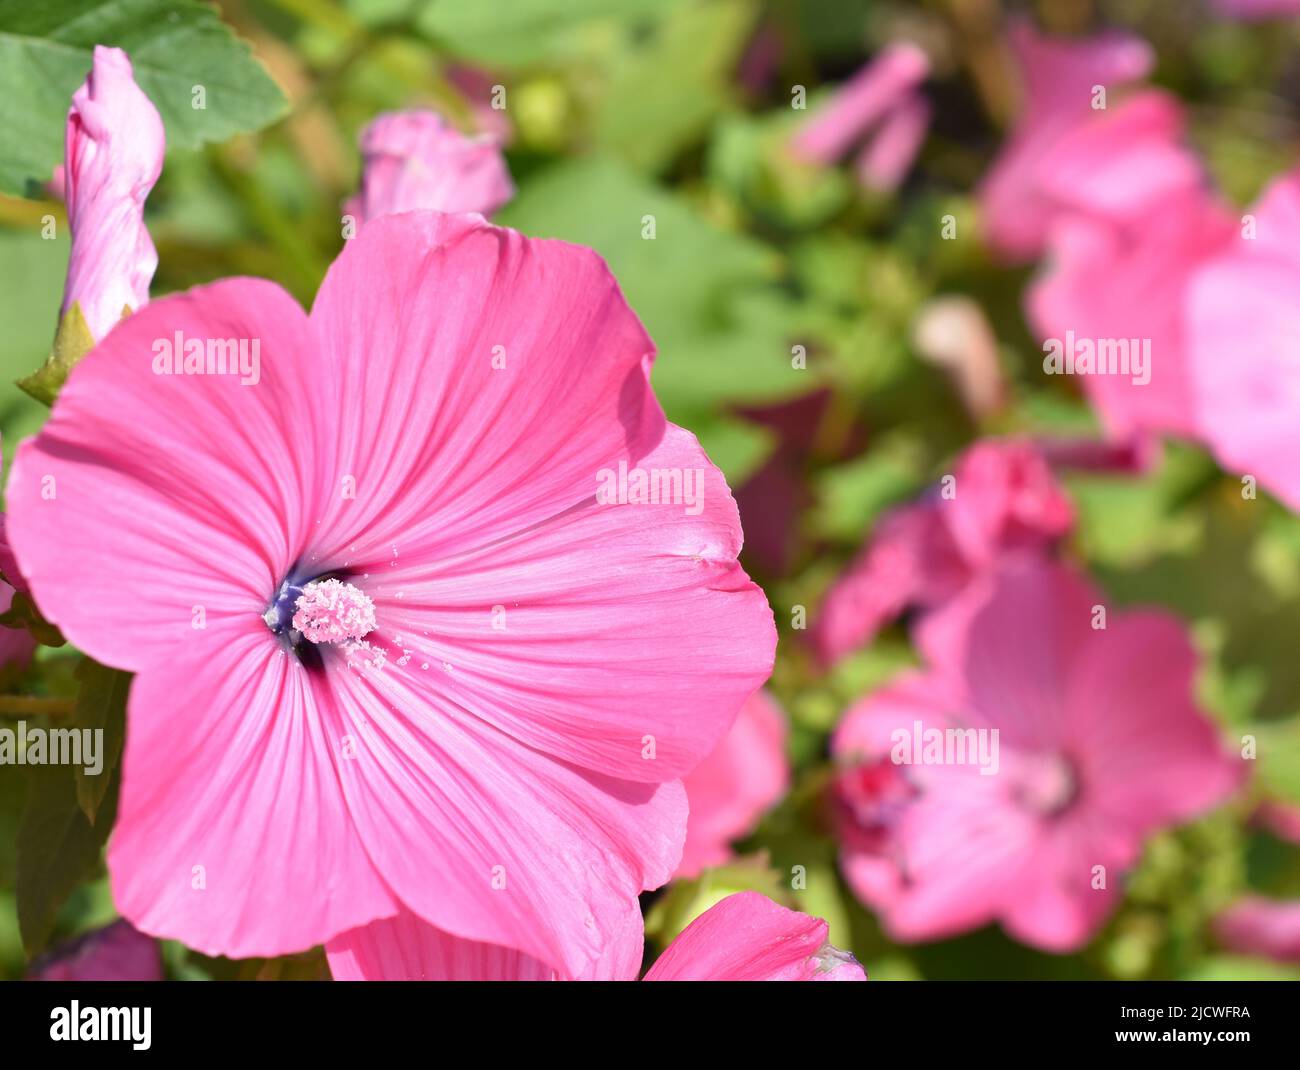 Common hollyhock althaea rosea pink flowers Stock Photo